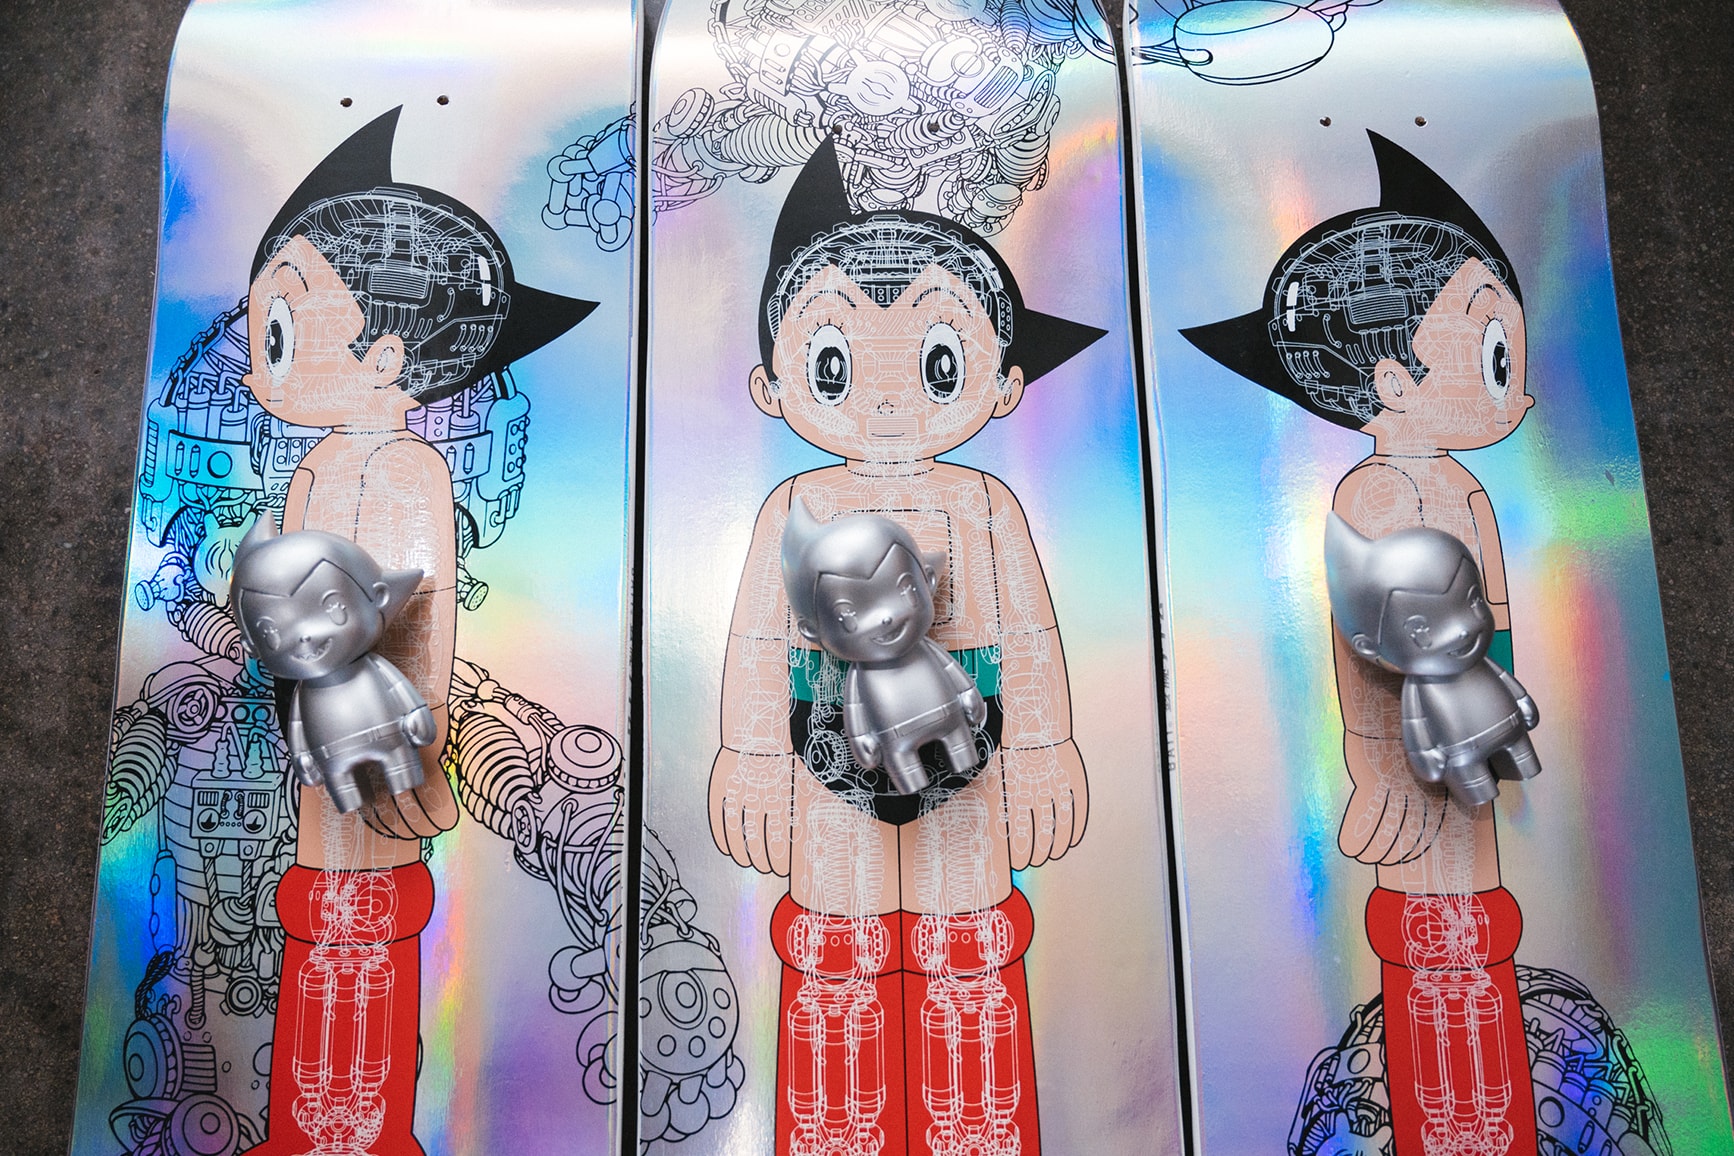 BAIT Astro Boy FUNKO kokies Reebok Club C Stomper Instapump Fury Capsule collection info 